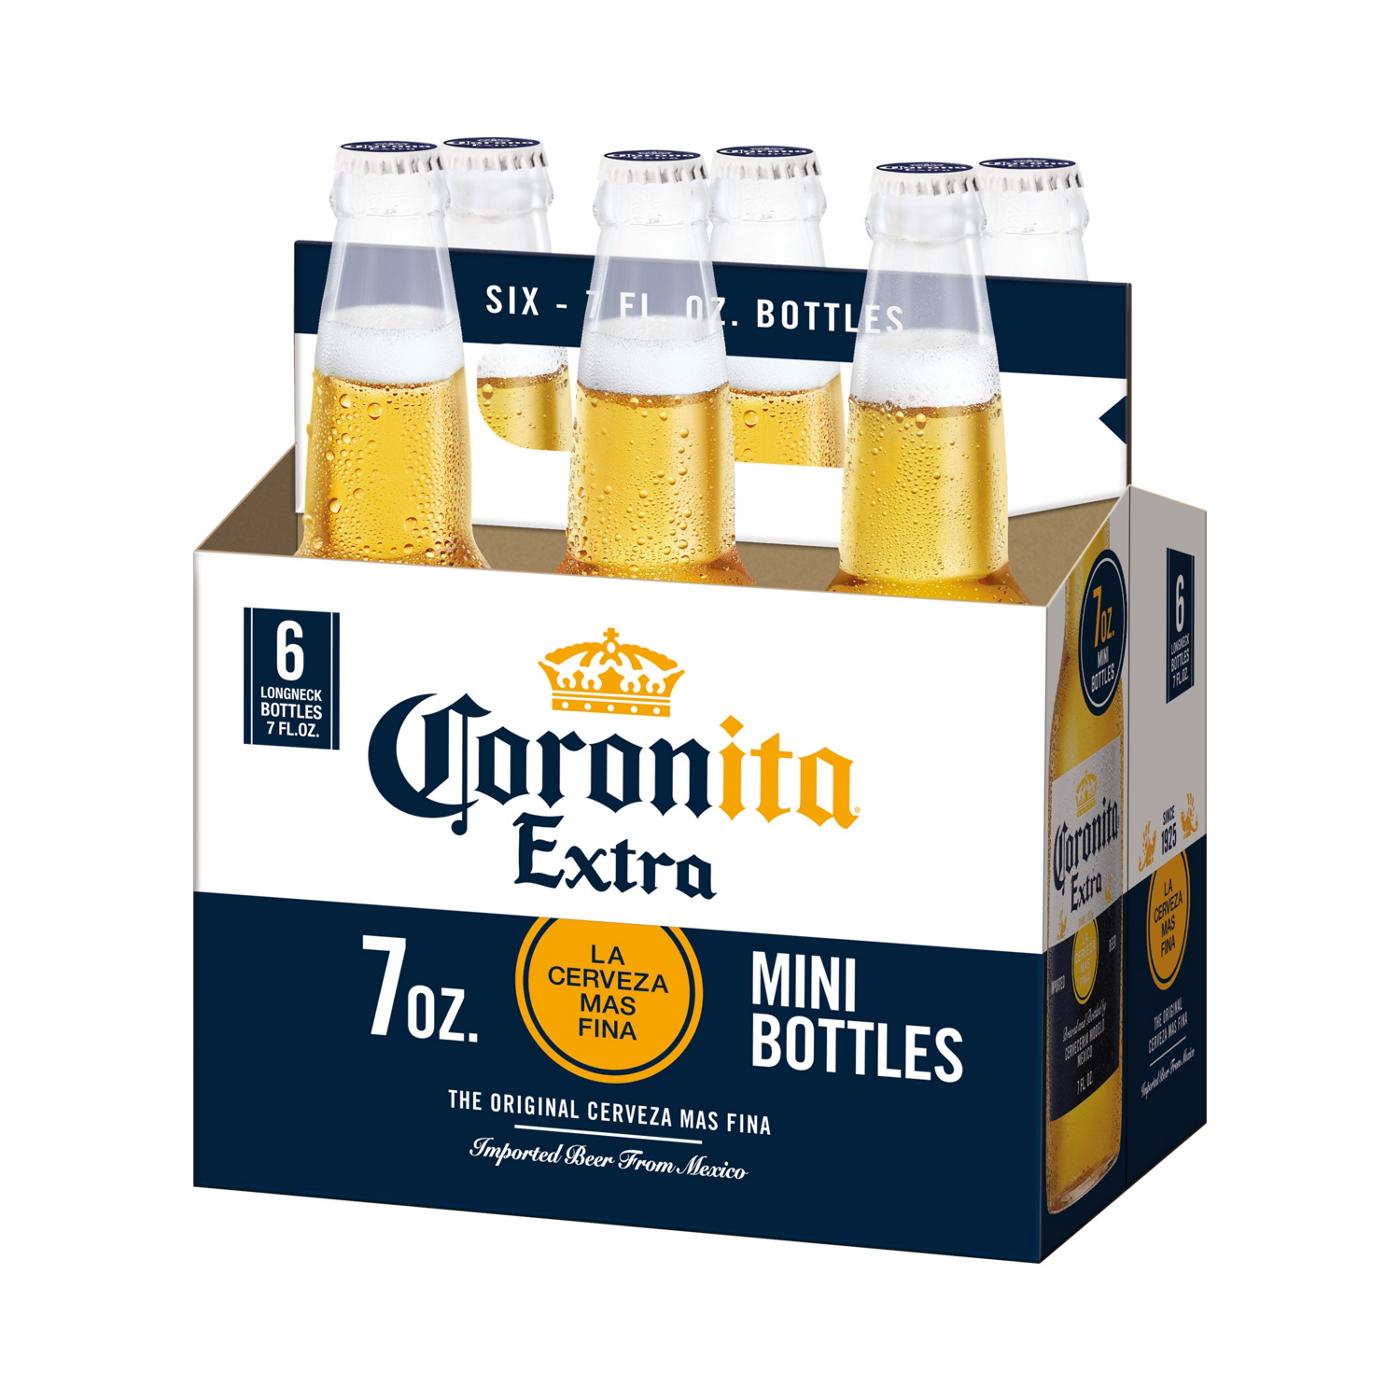 Corona Extra Coronita Lager Mexican Beer 6 pk Bottles; image 11 of 11